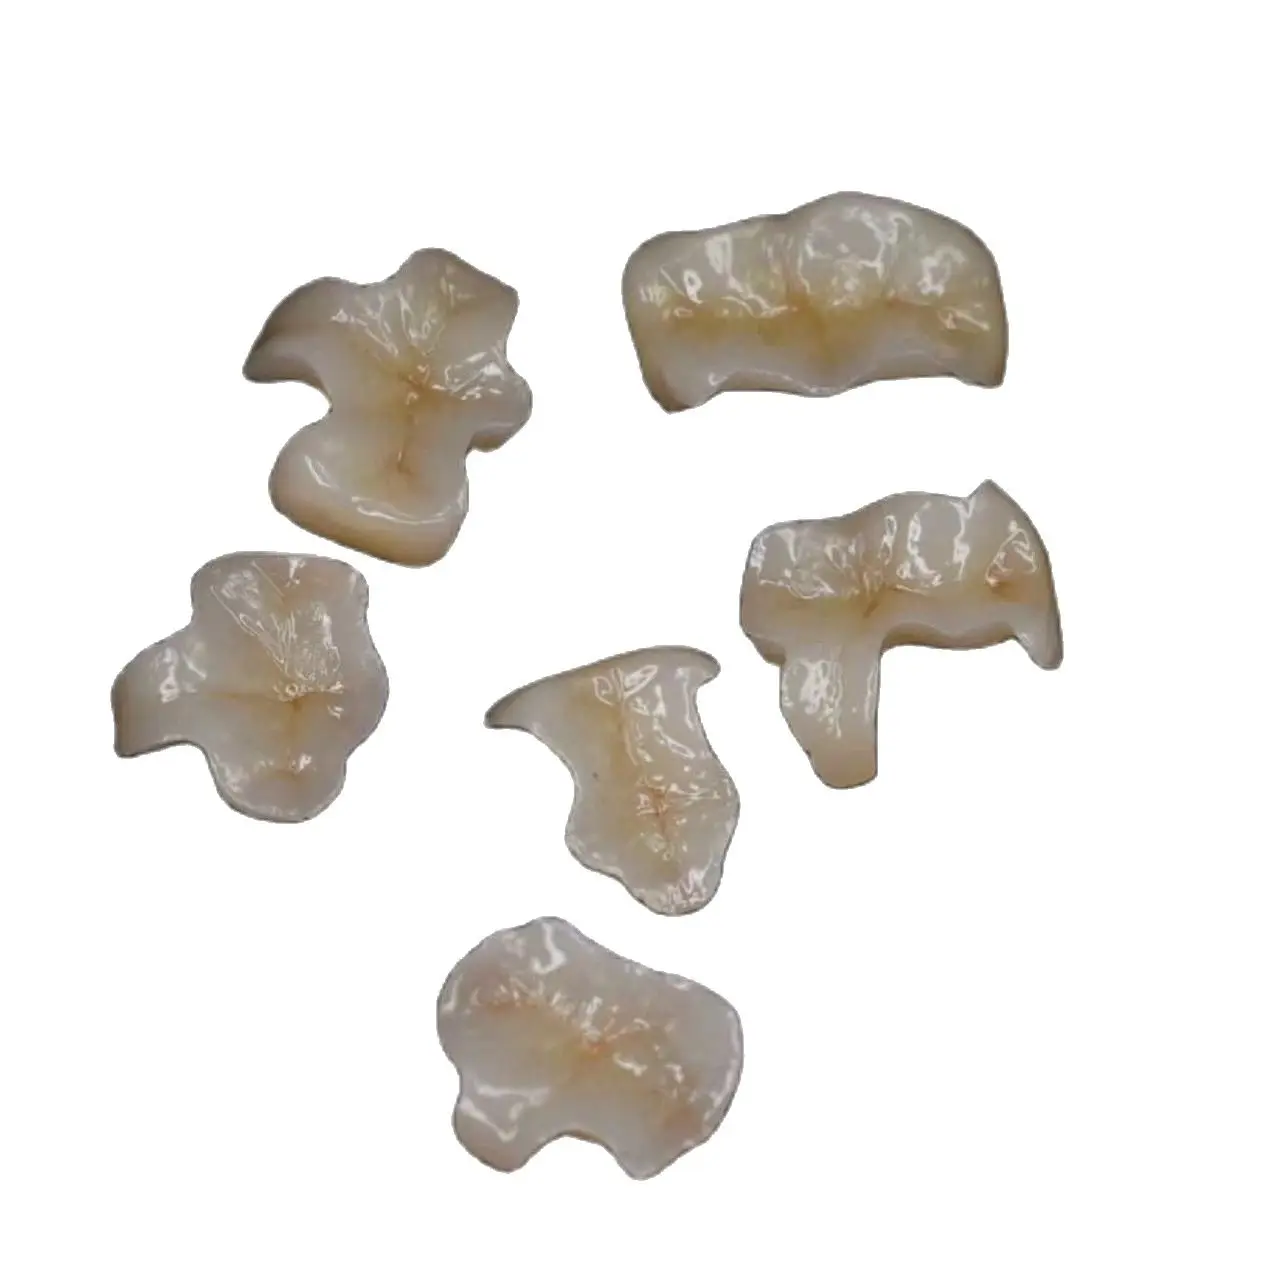 HT/LT IPS Pressd Ingot Lithium Disilicate Column Block Dental Teeth White Casting Material Making Veneer Emax Onlay and Inlay